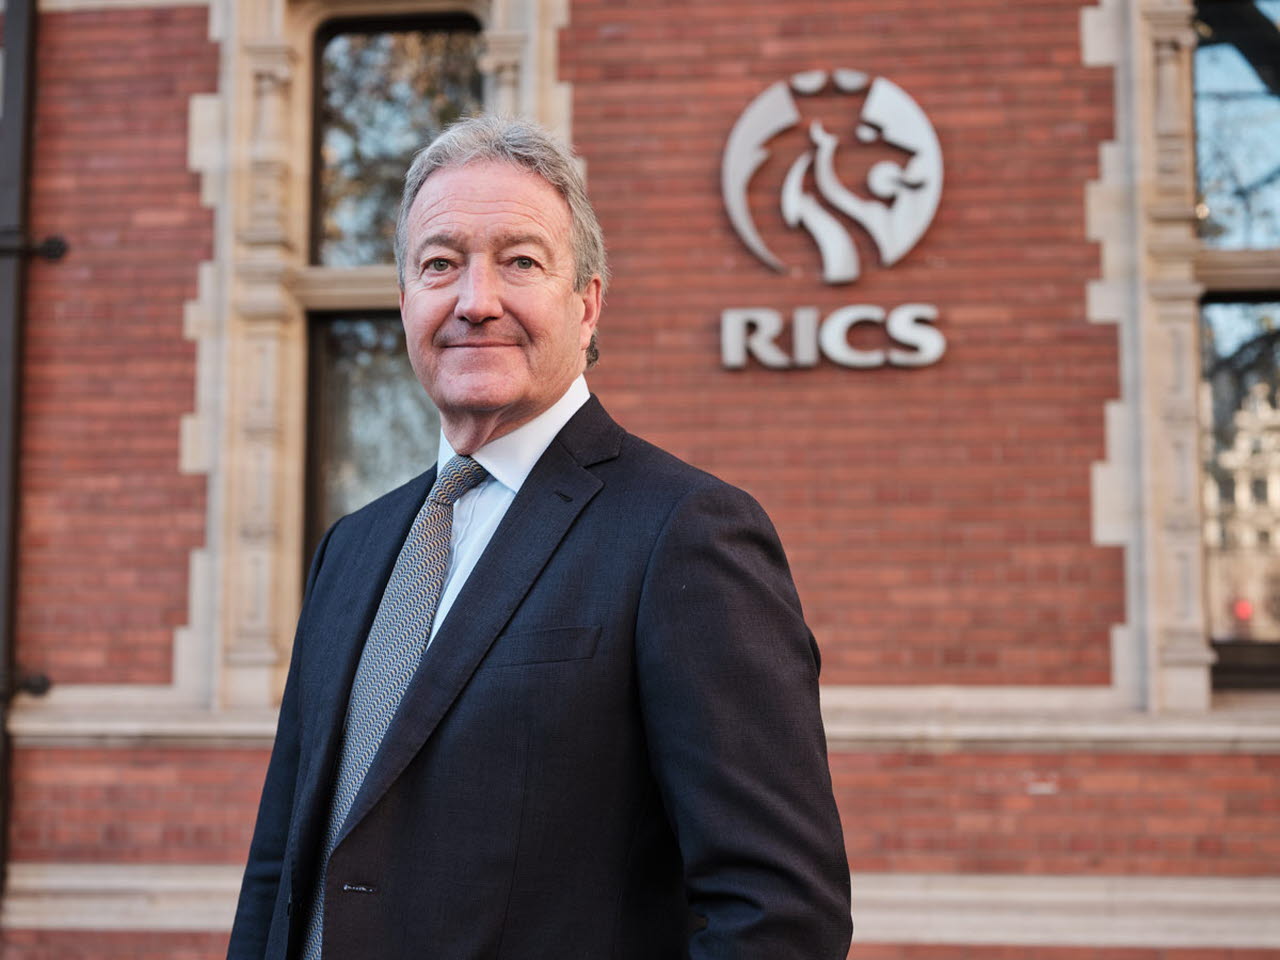 Martin Samworth Named as New Chair of RICS Board